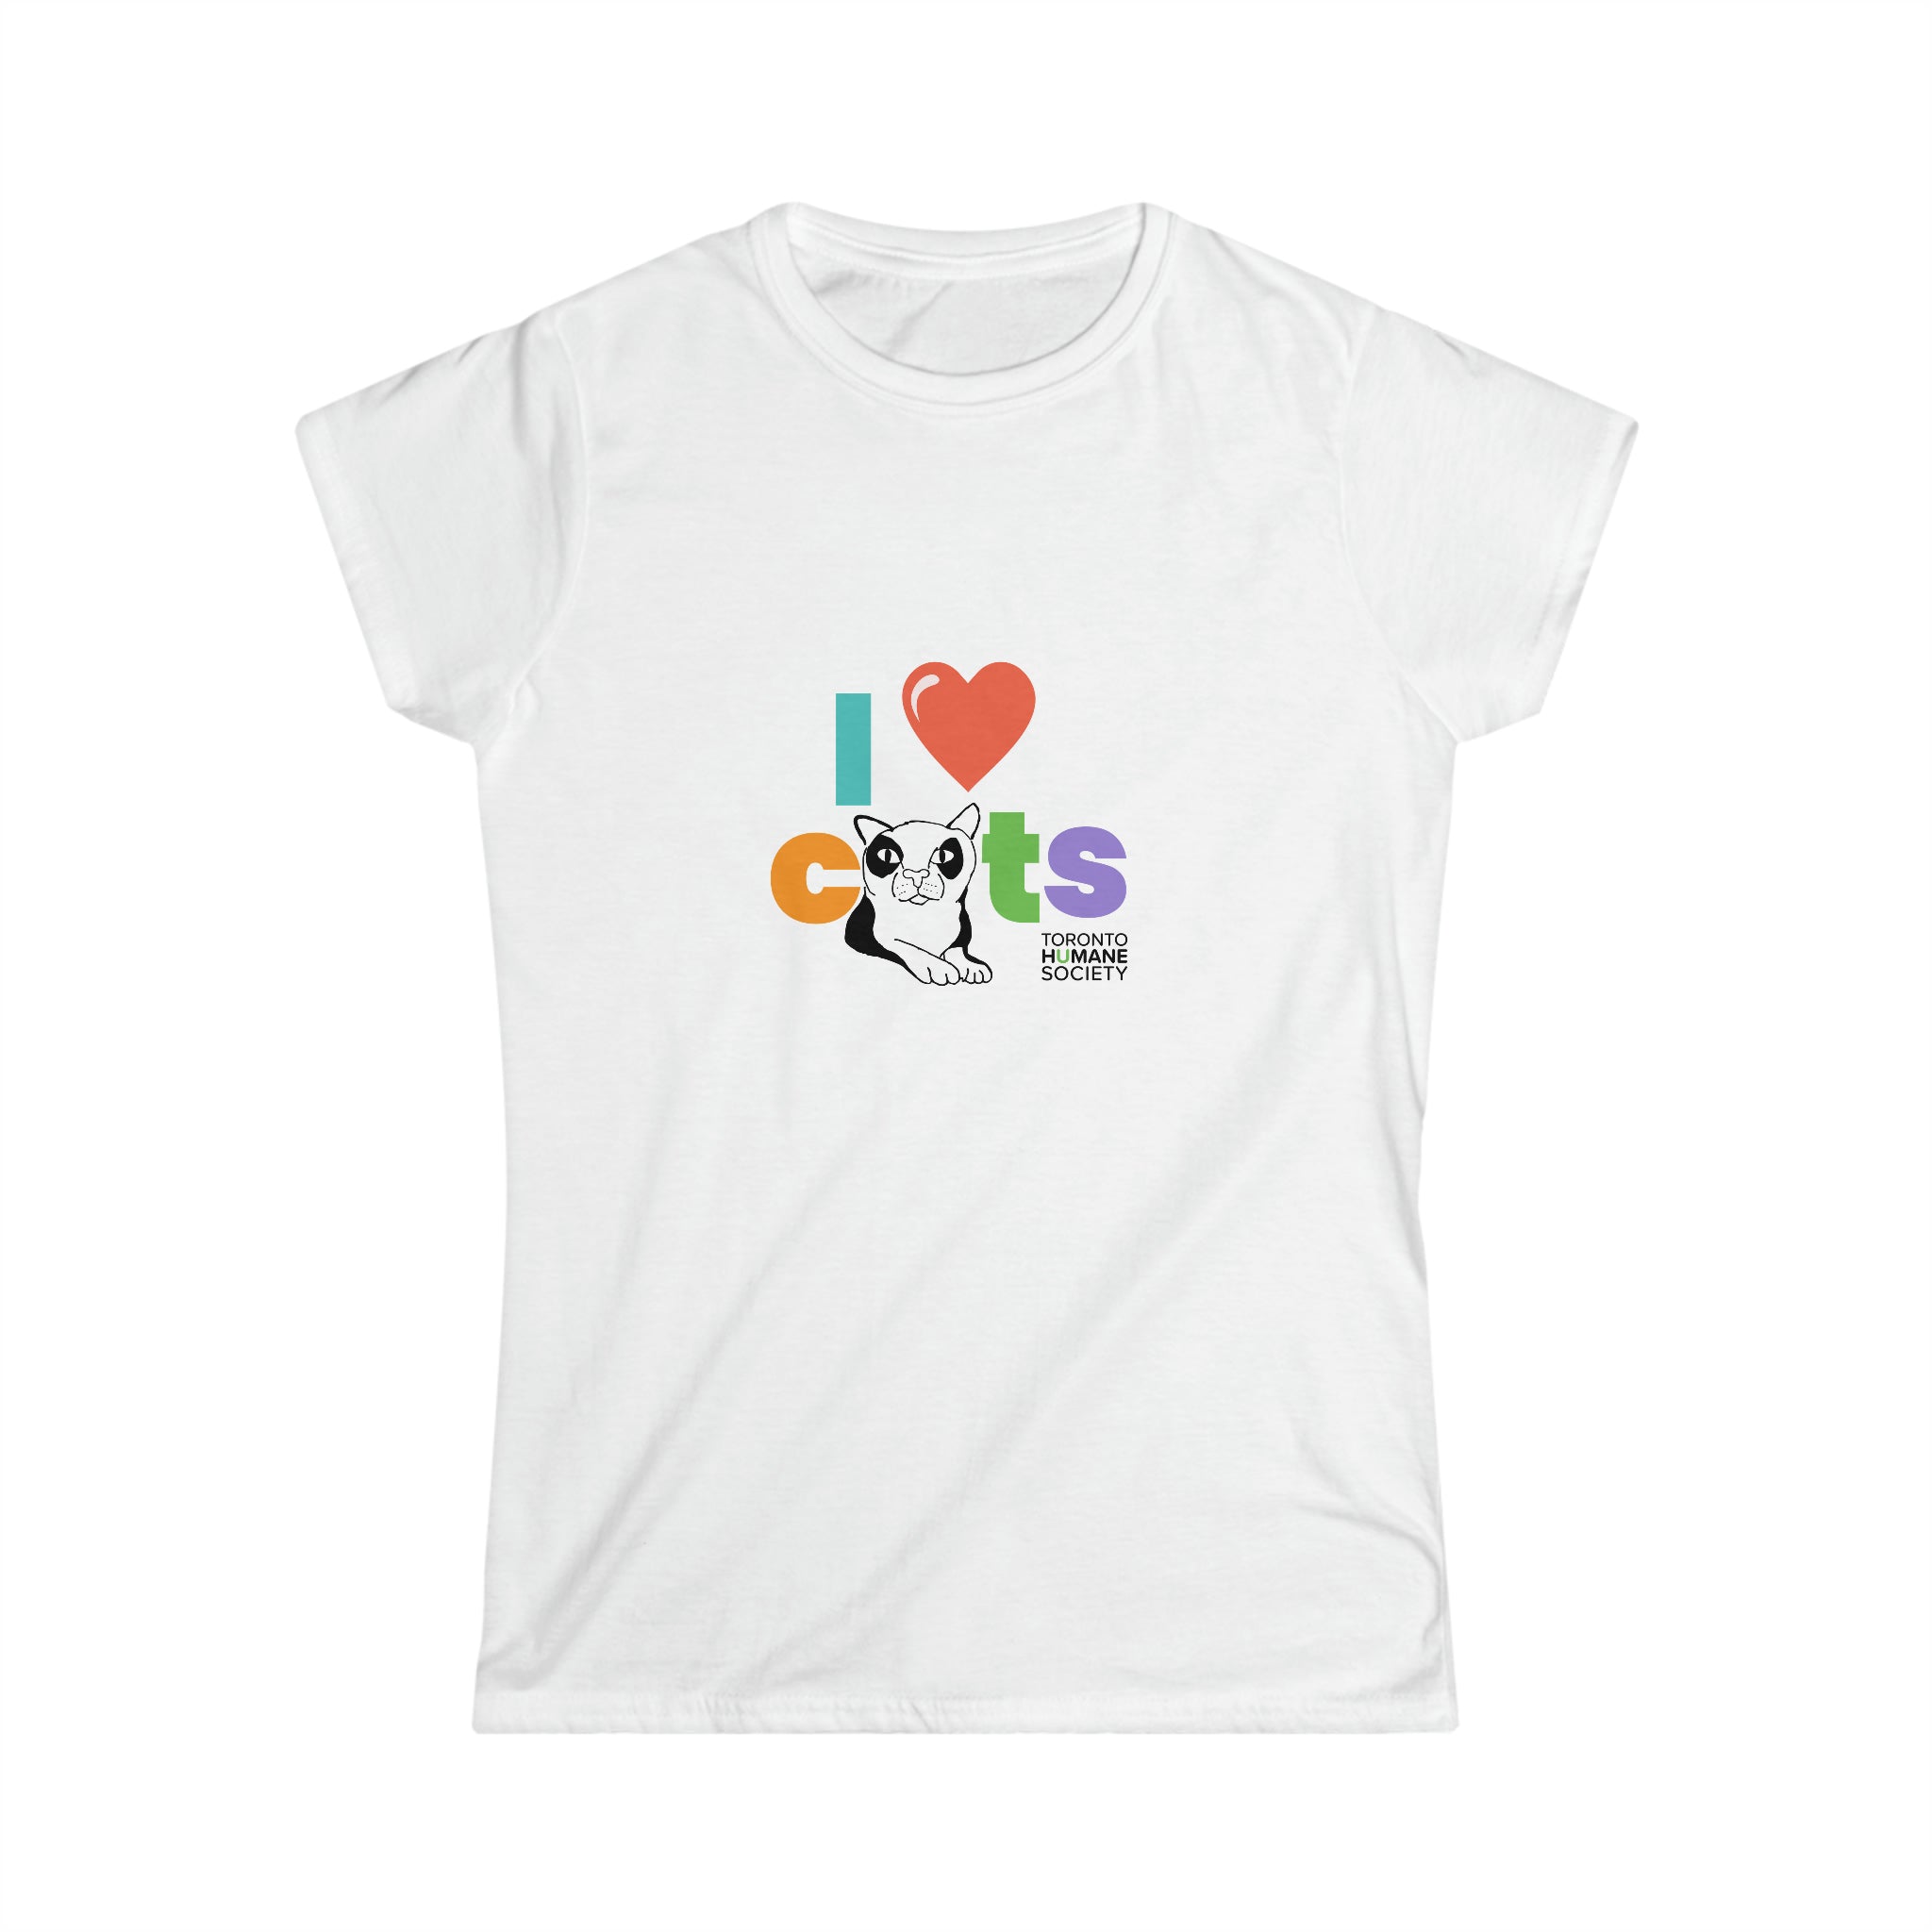 Women's Softstyle Tee - I Love Cats